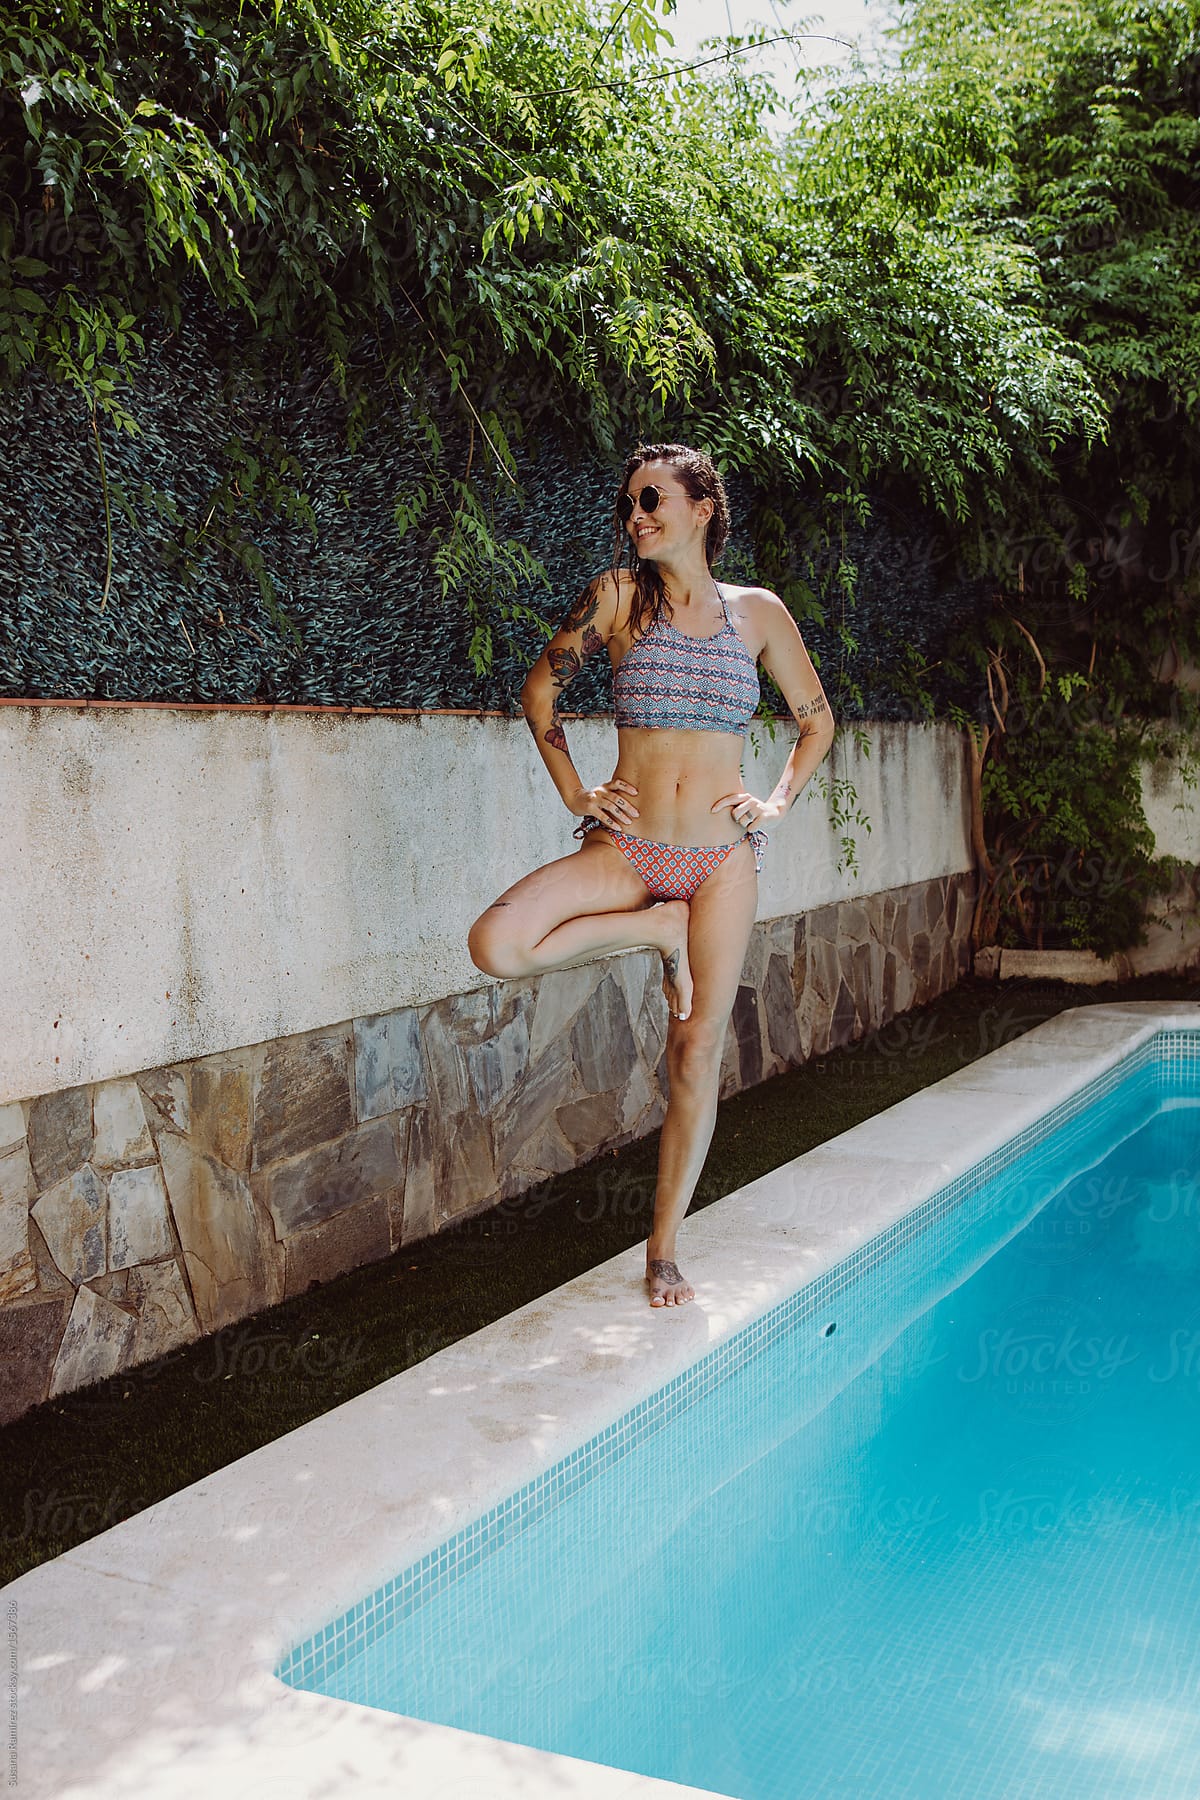 Woman In Bikini In The Pool del colaborador de Stocksy Susana Ramírez Stocksy